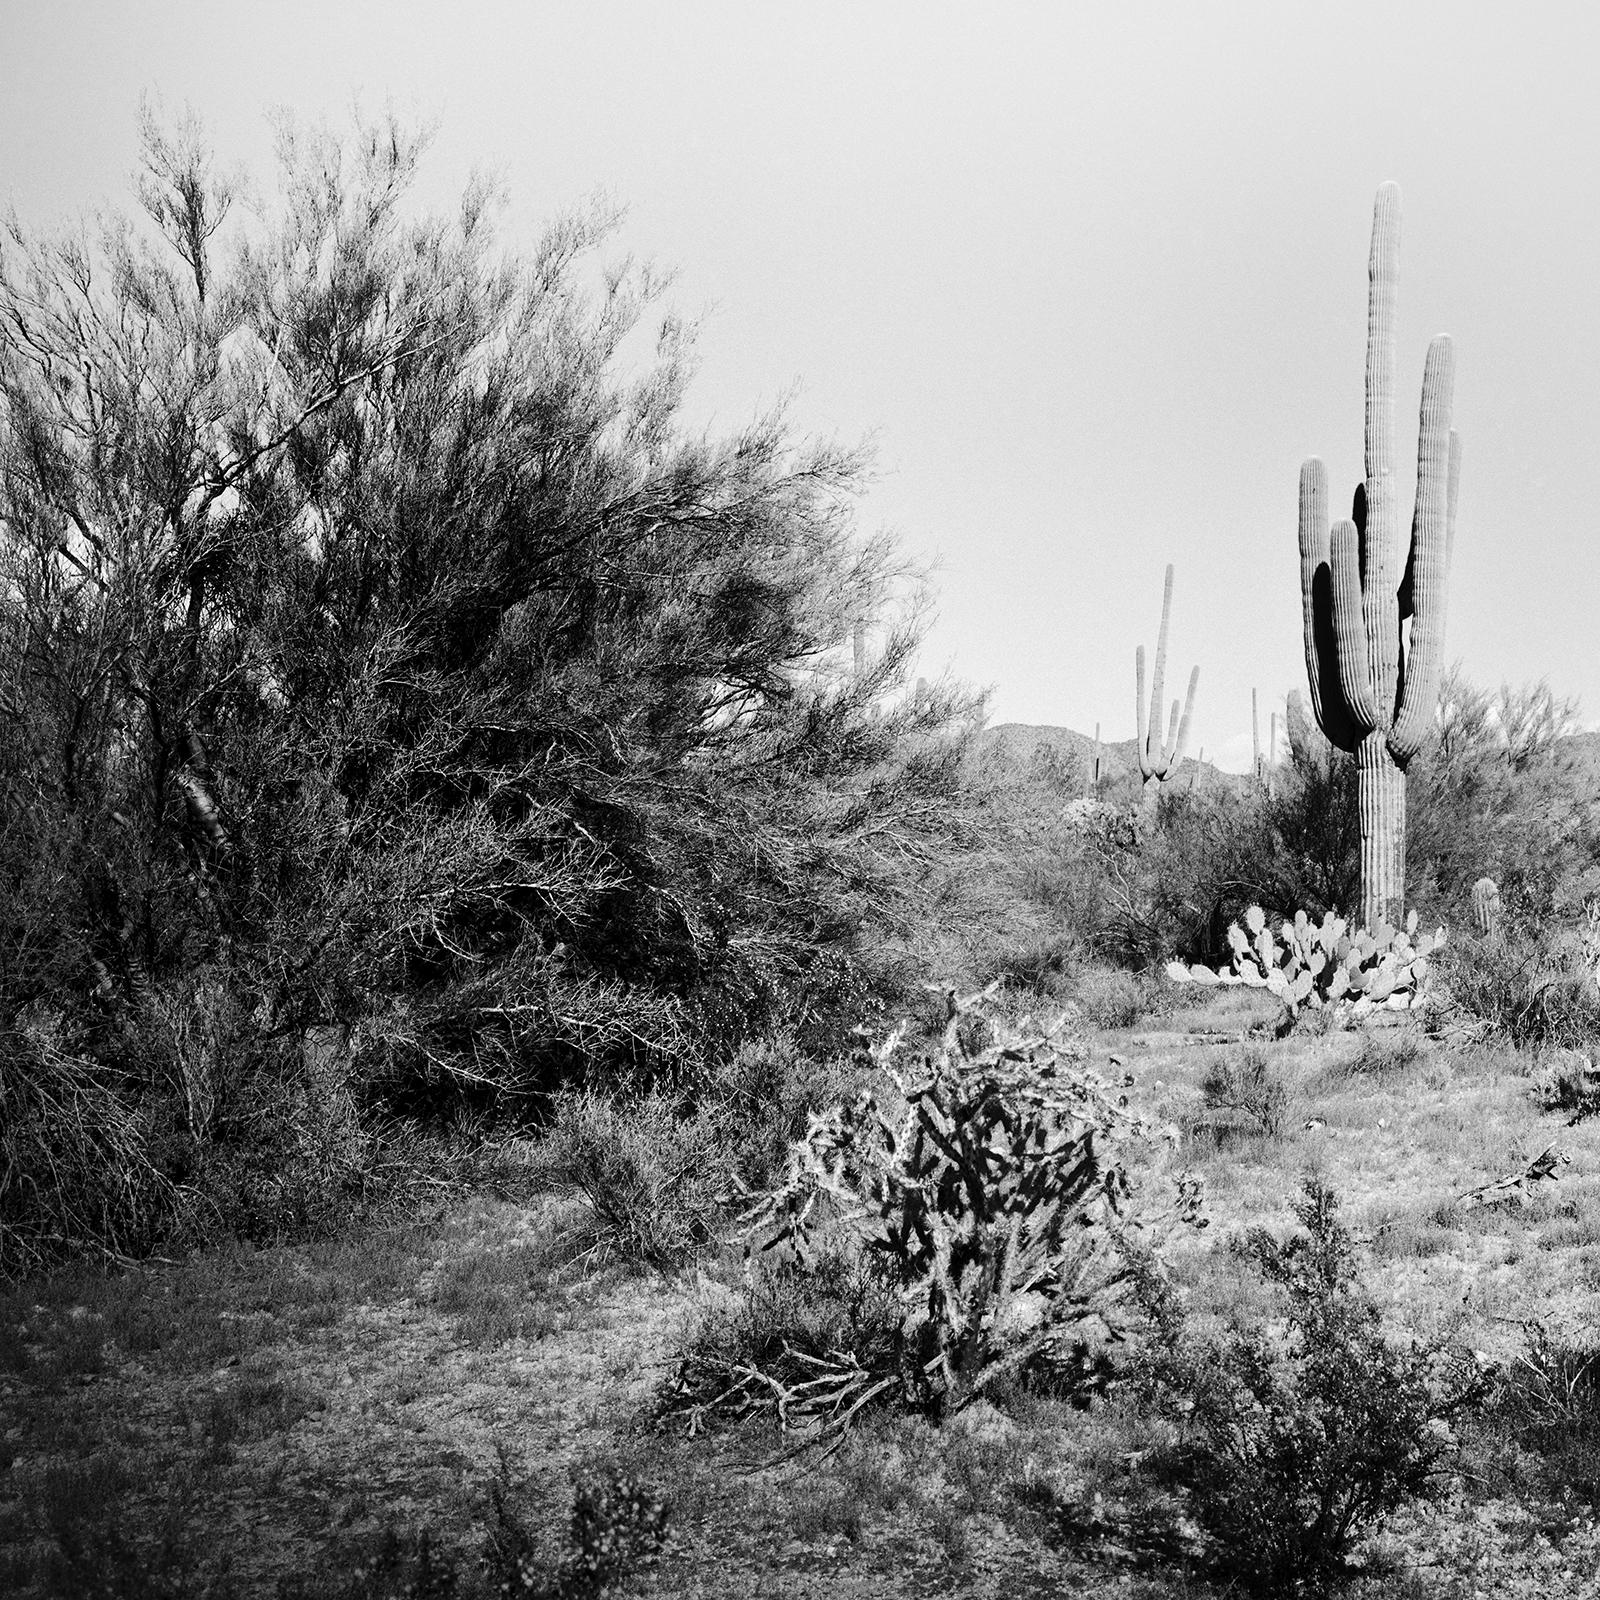 Saguaro Cactus, National Park, Arizona, USA, black and white landscape photo For Sale 4